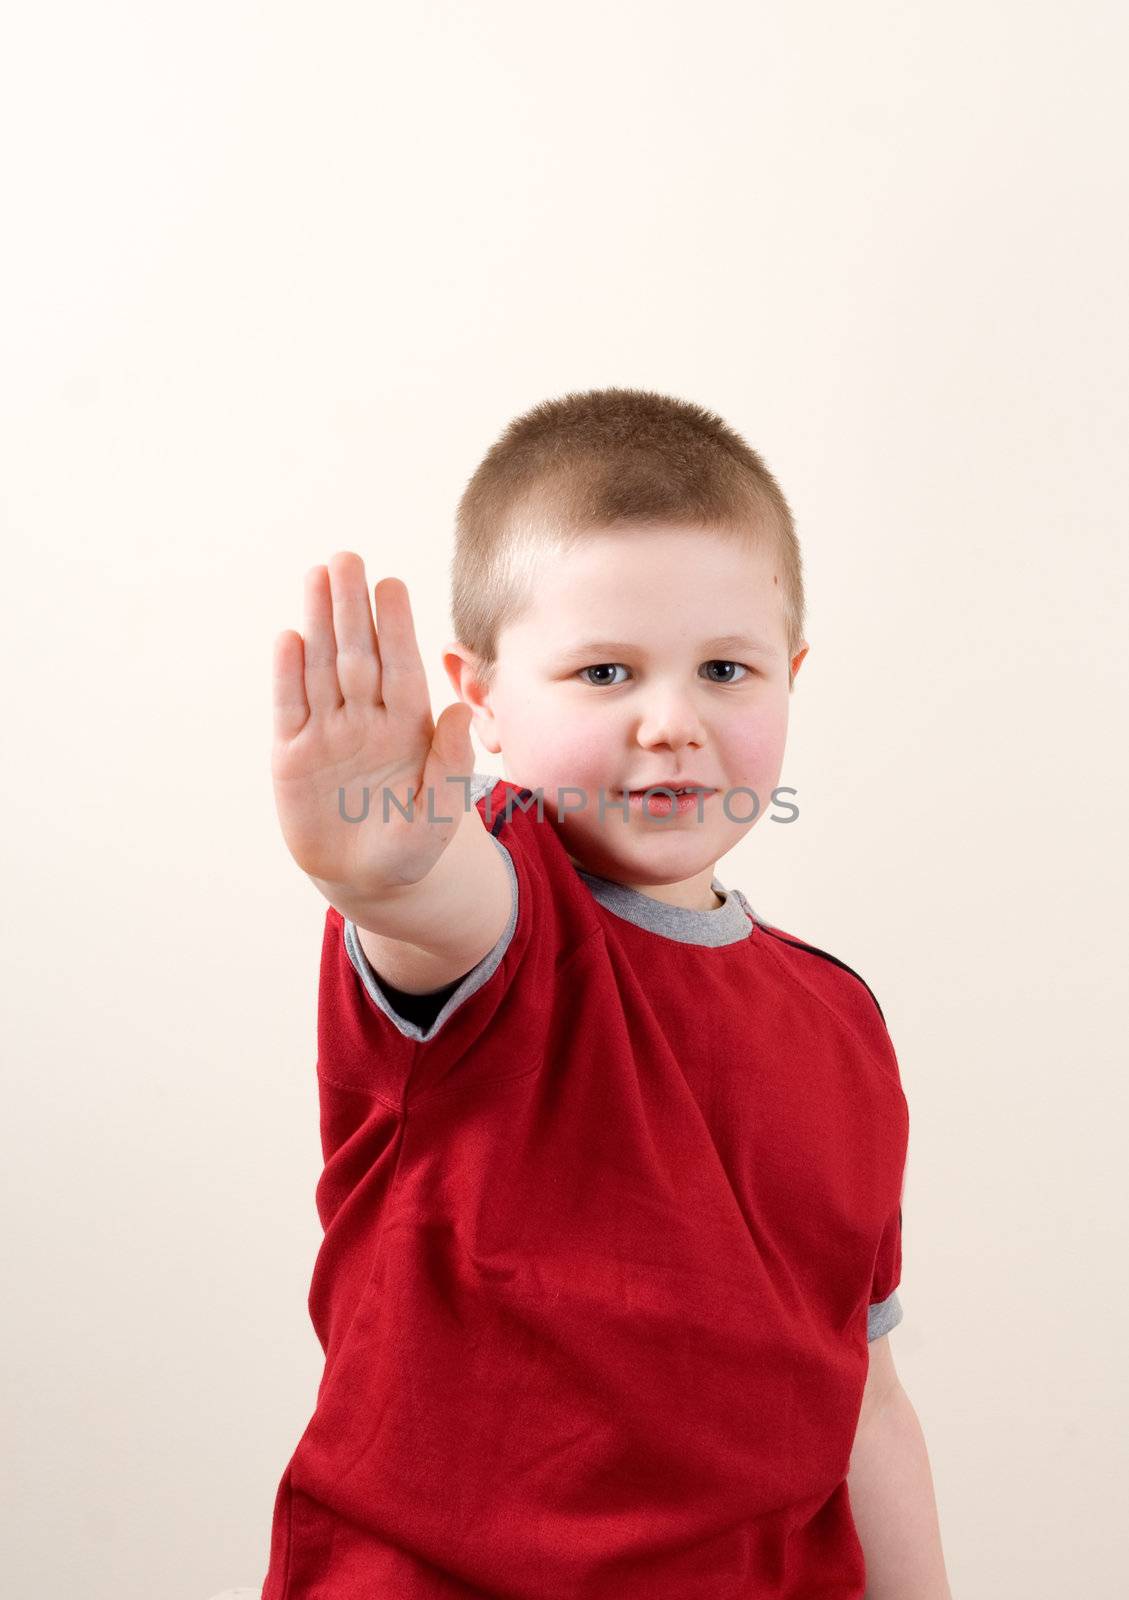 small boy portrait, gesture stop by aguirre_mar